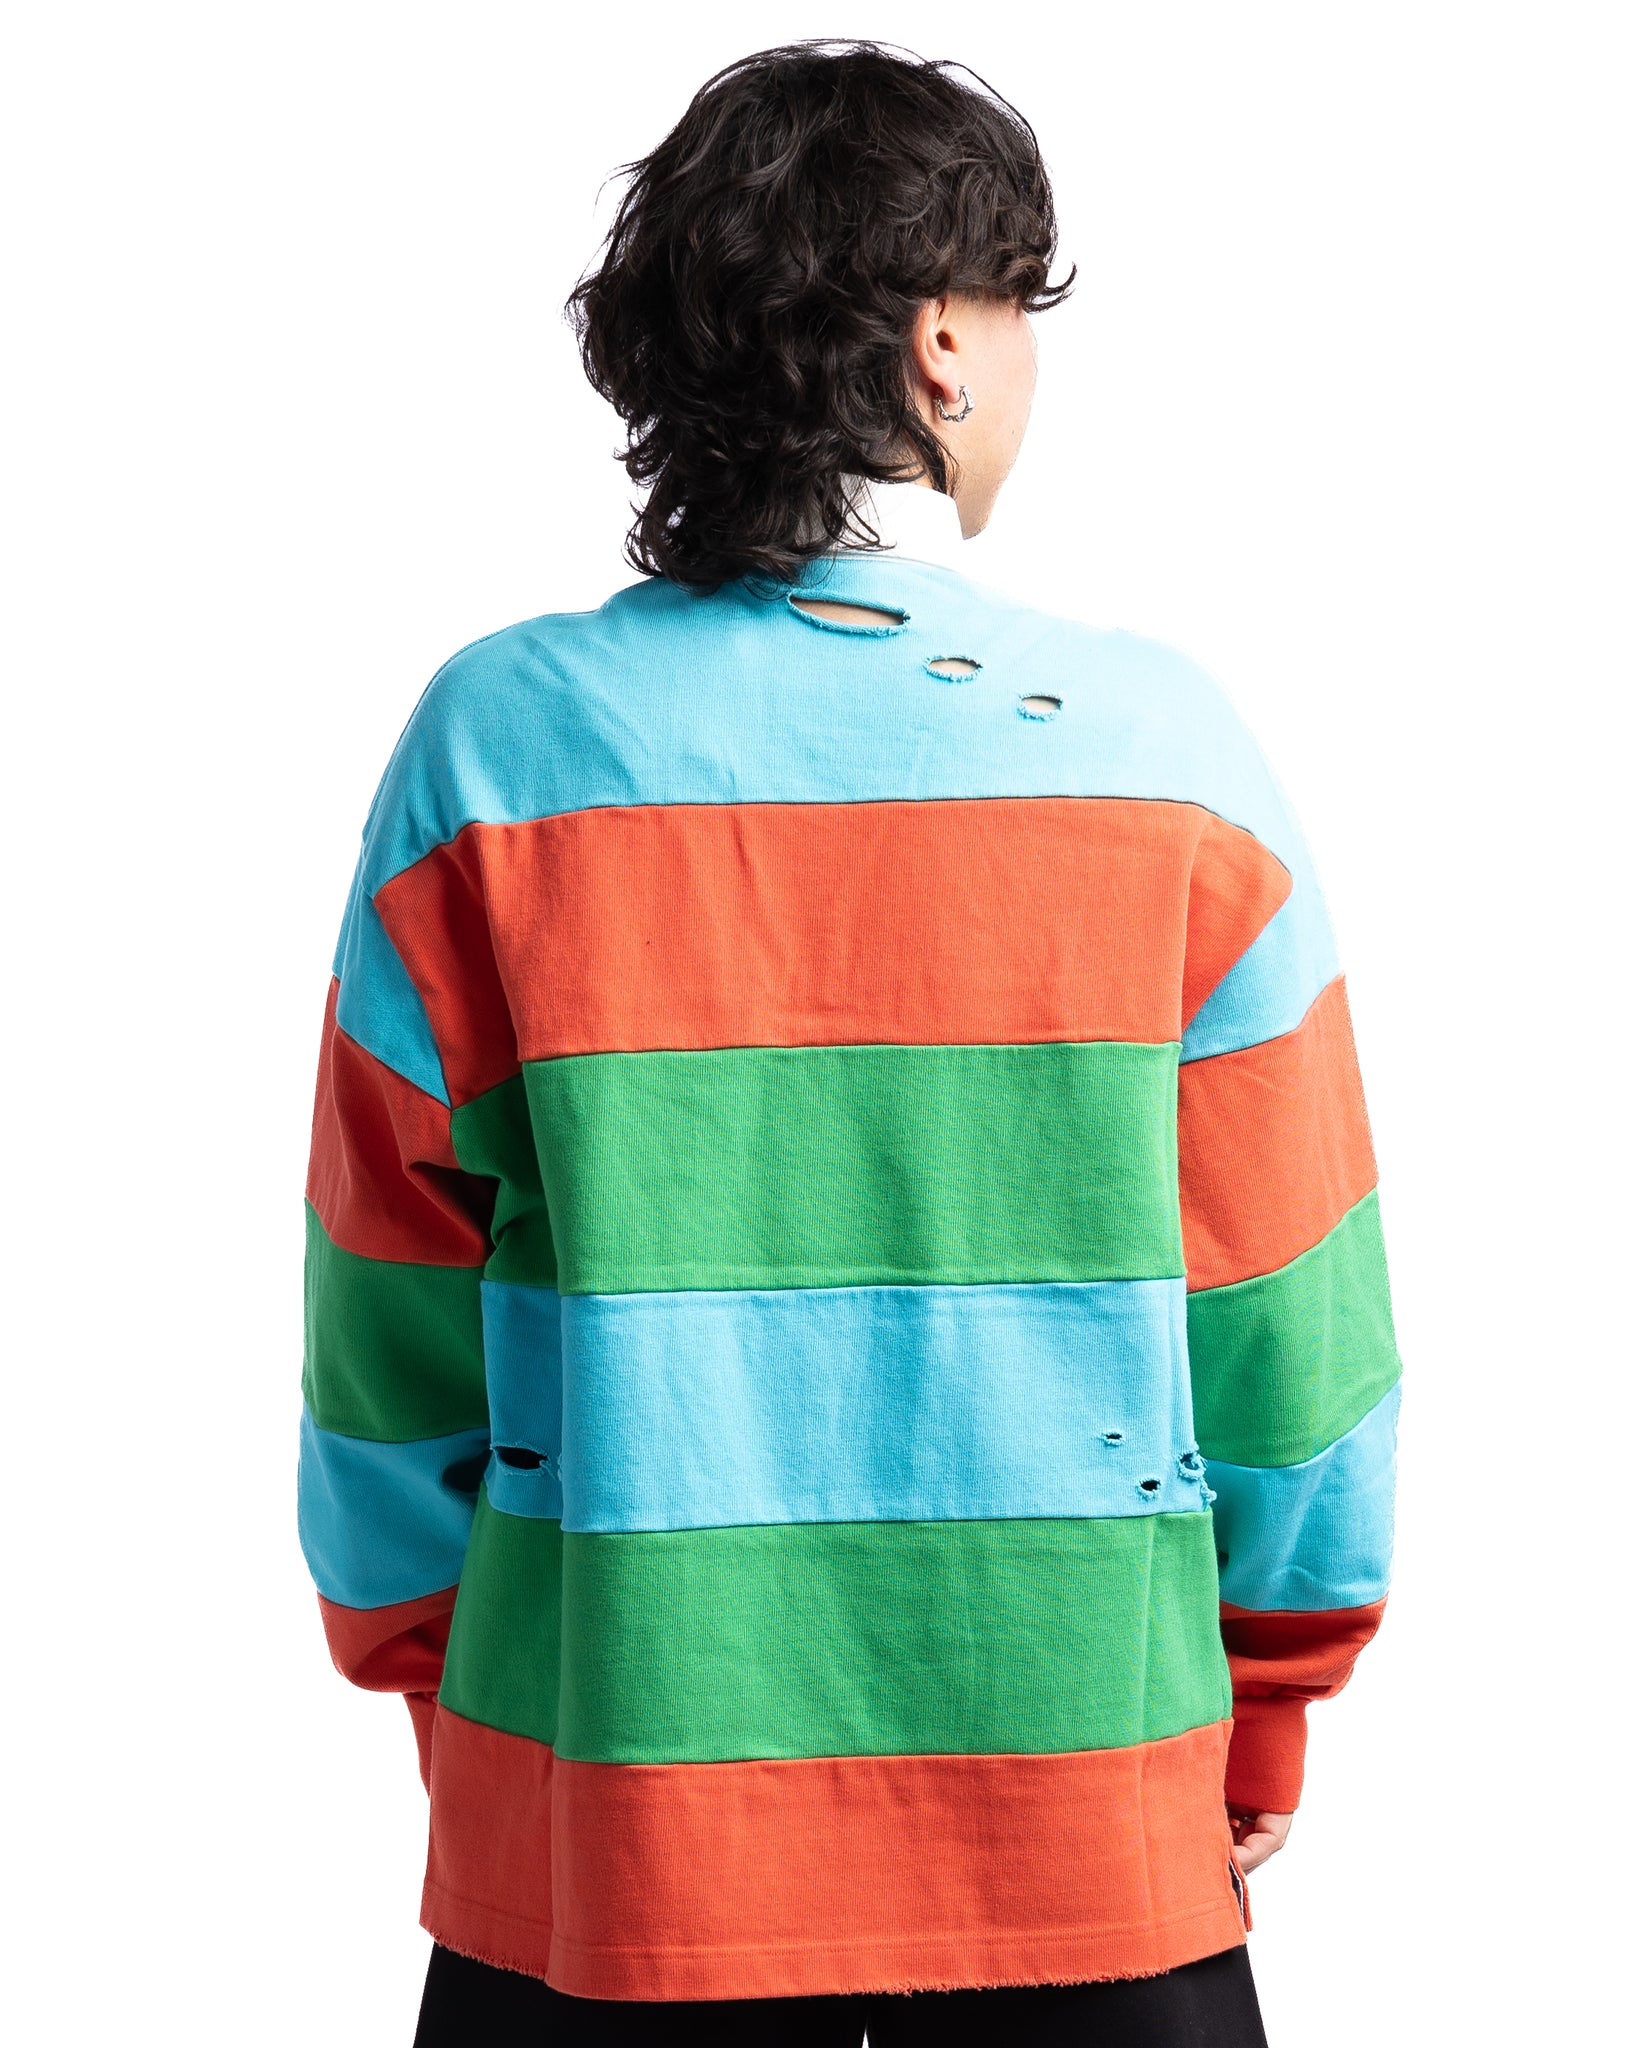 MOTR Polo LS Shirt Infrared/Turquoise Multi